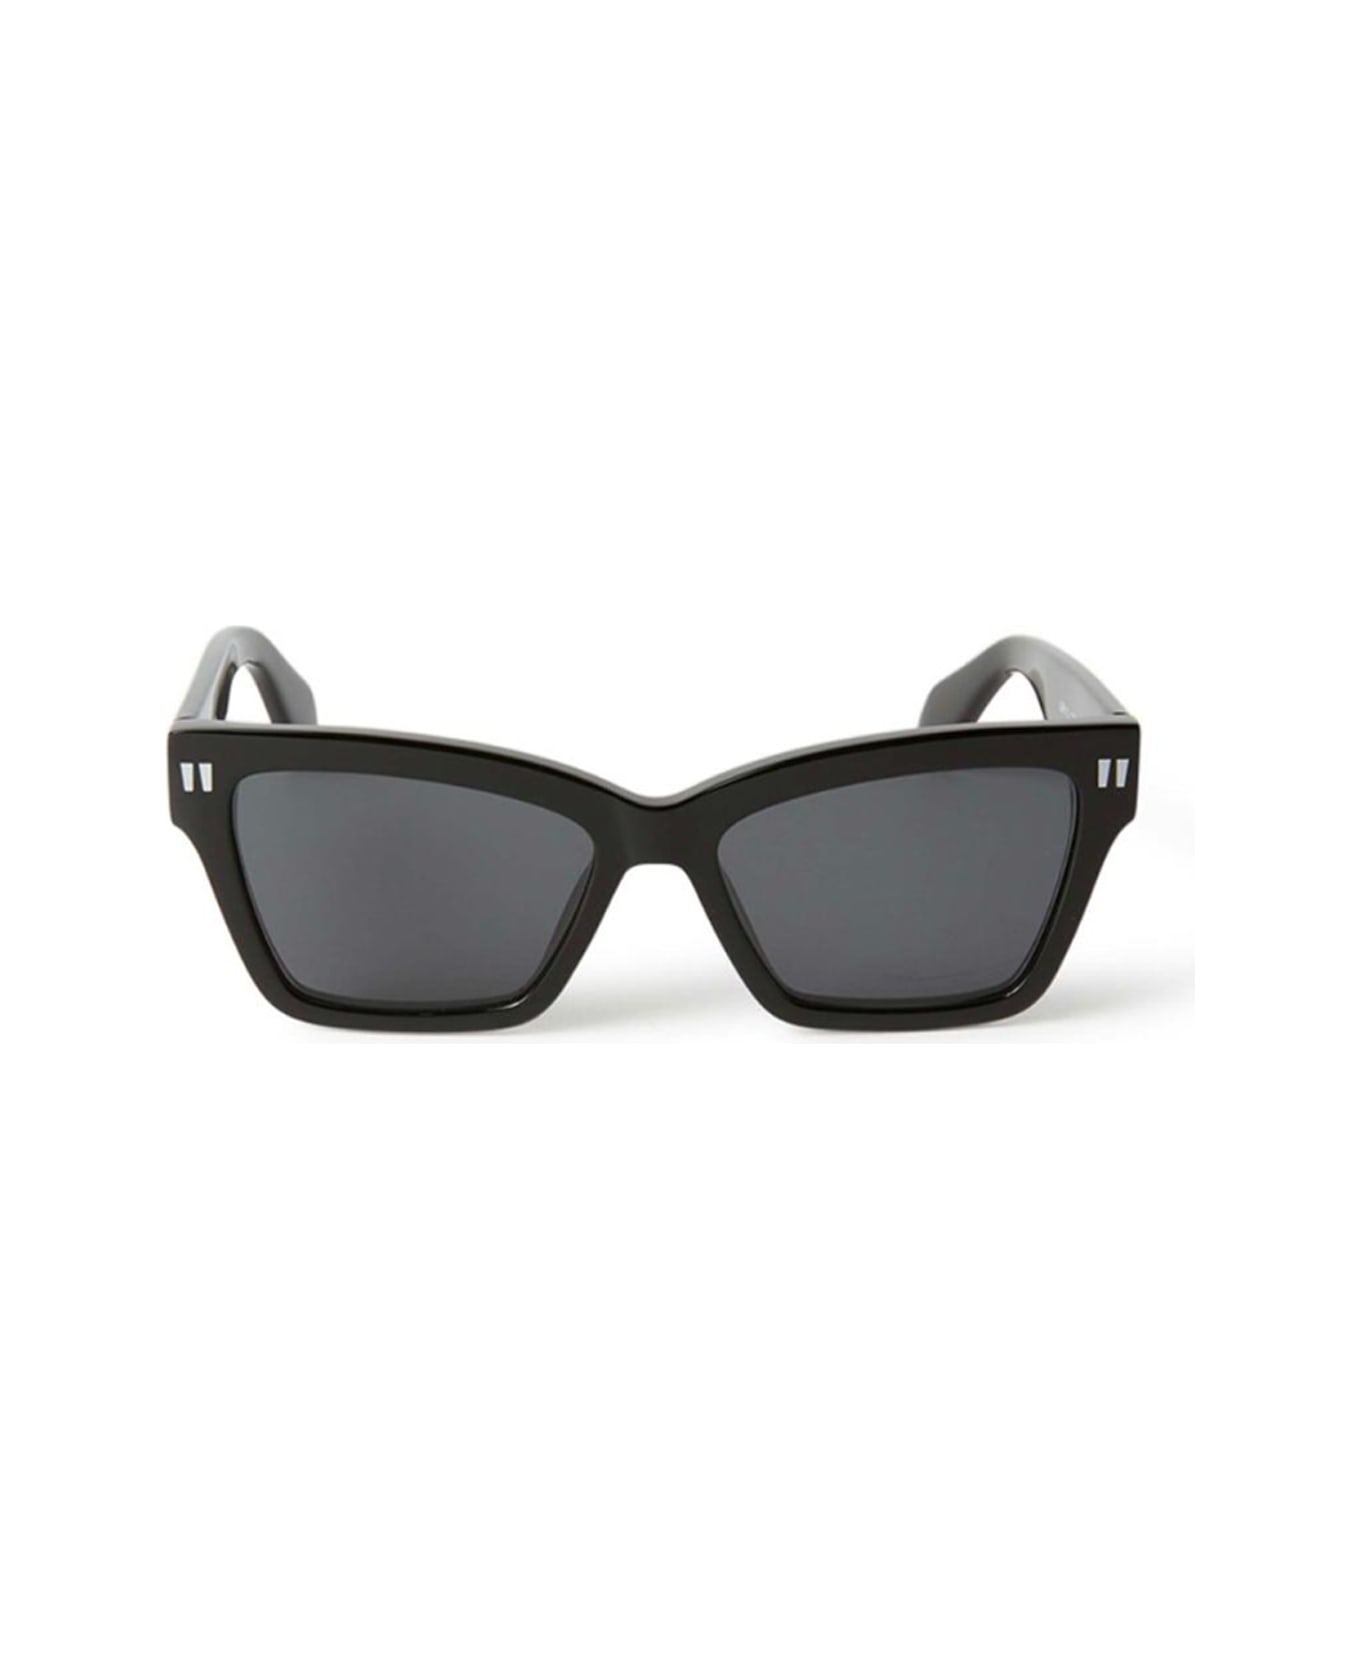 Off-White Oeri110 Cincinnati 1007 Black Sunglasses - Nero サングラス